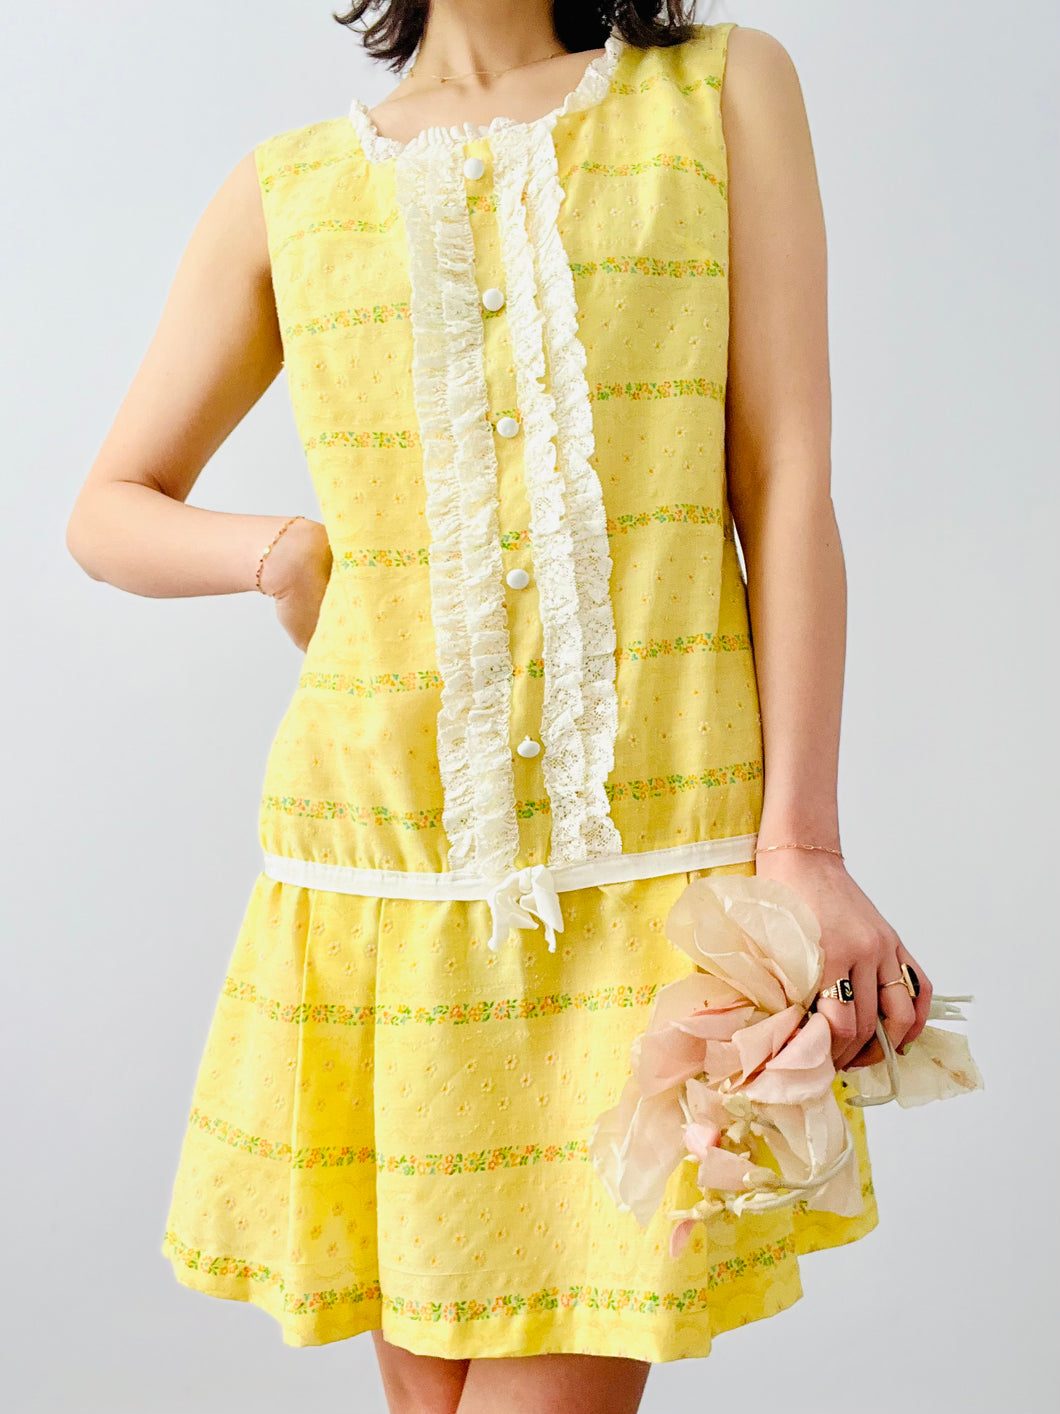 Vintage 1960s yellow lace dress